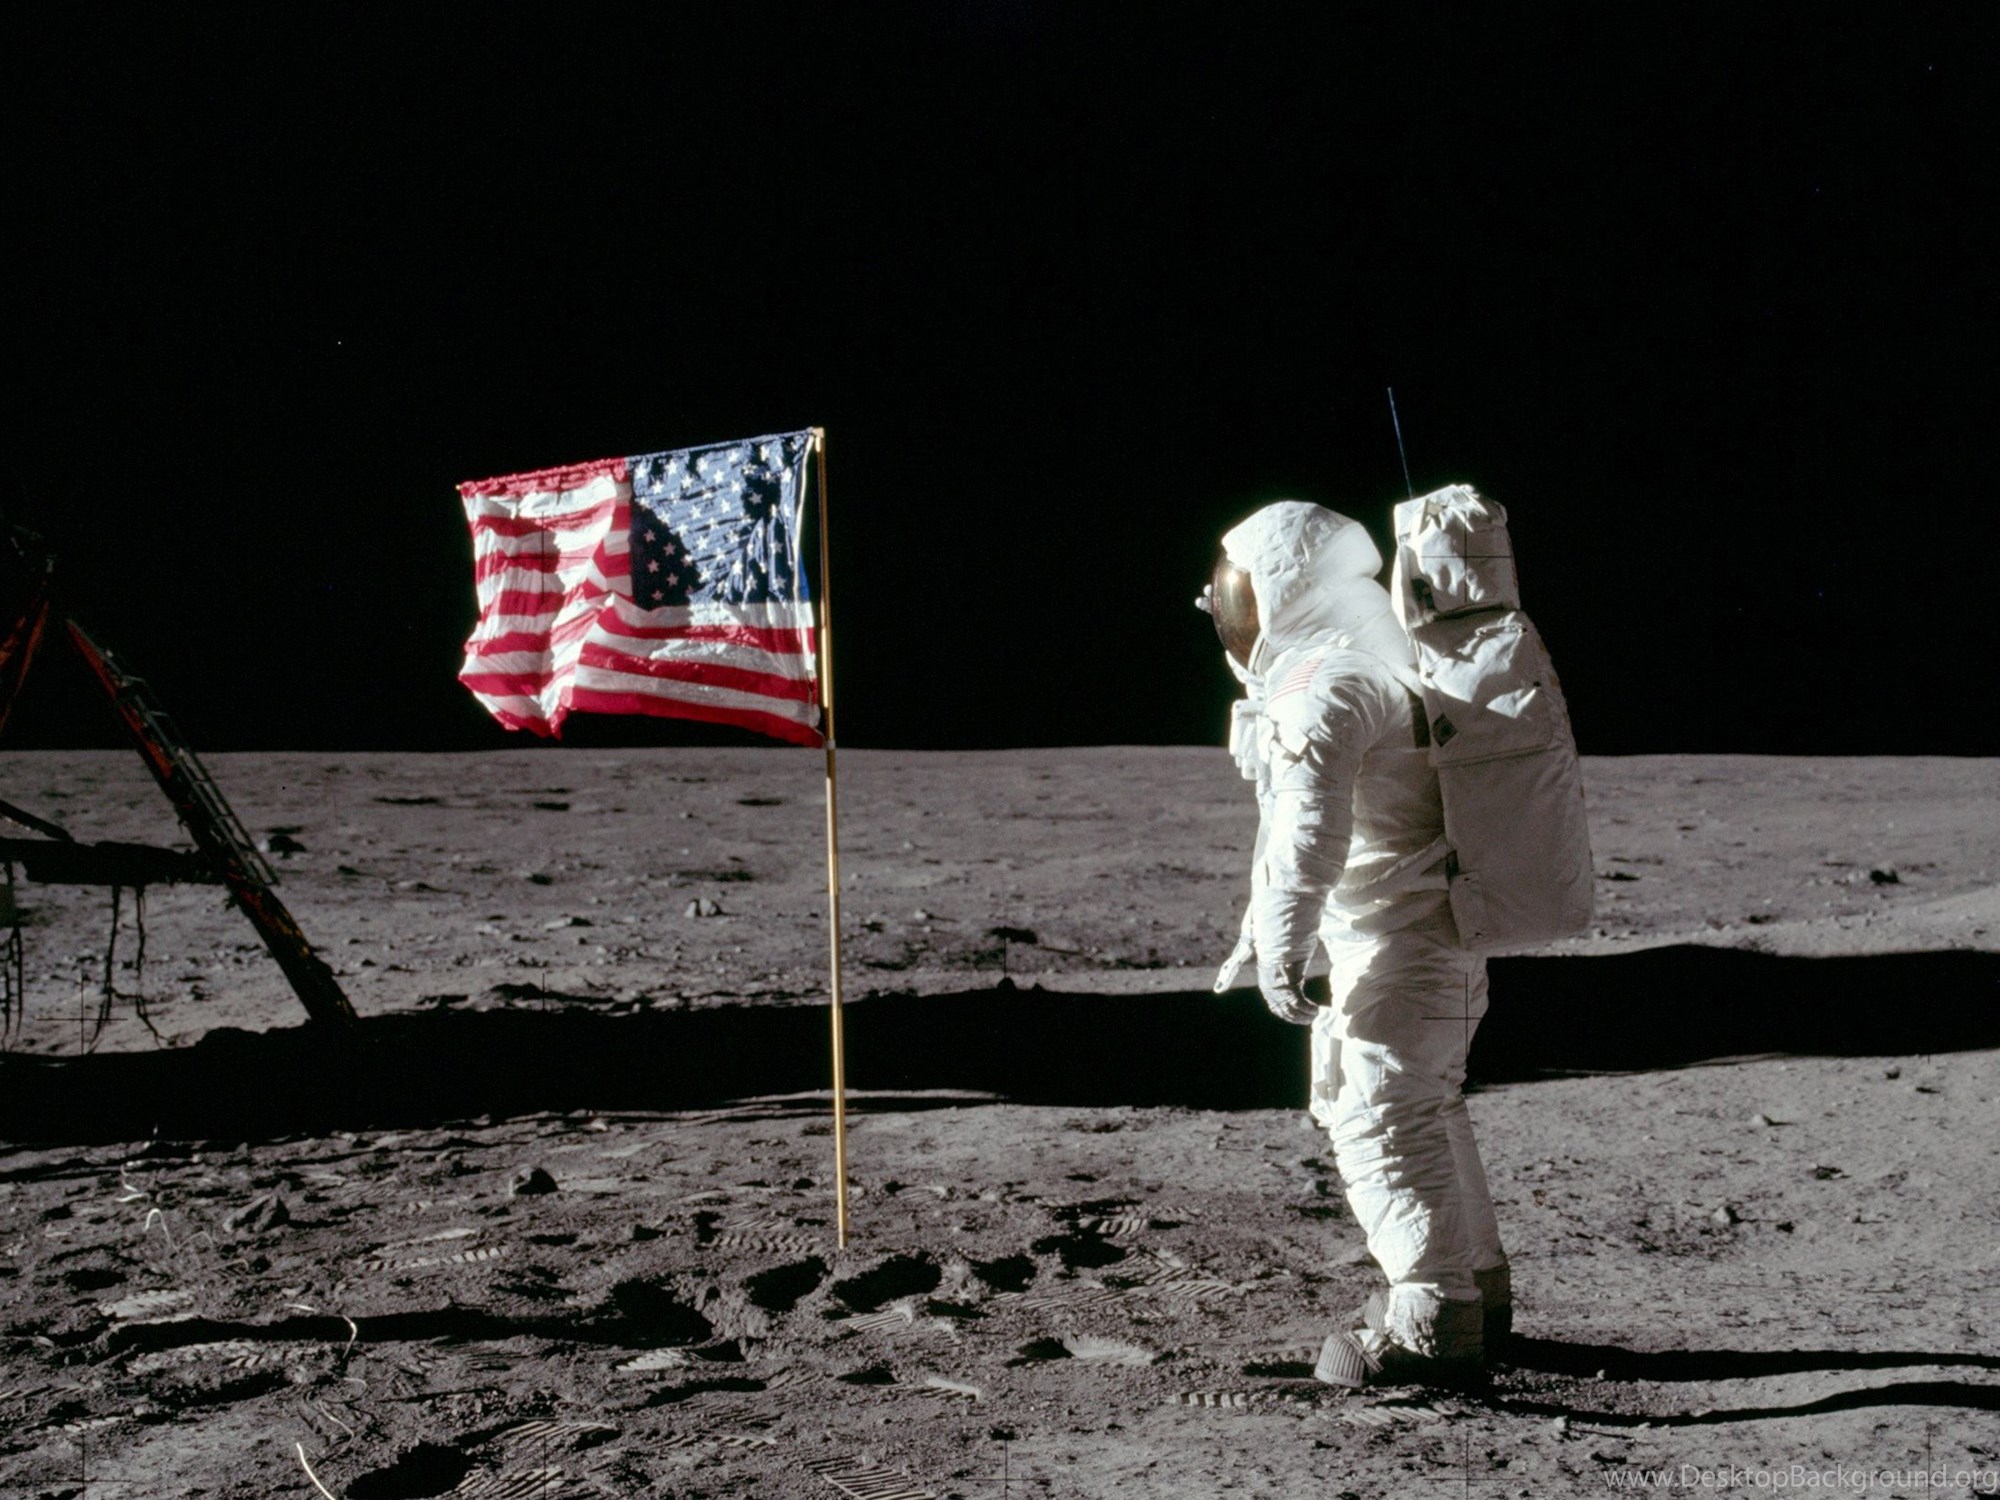 Armstrong on the moon. Аполлон 11 высадка на луну. Аполлон 11 1969.